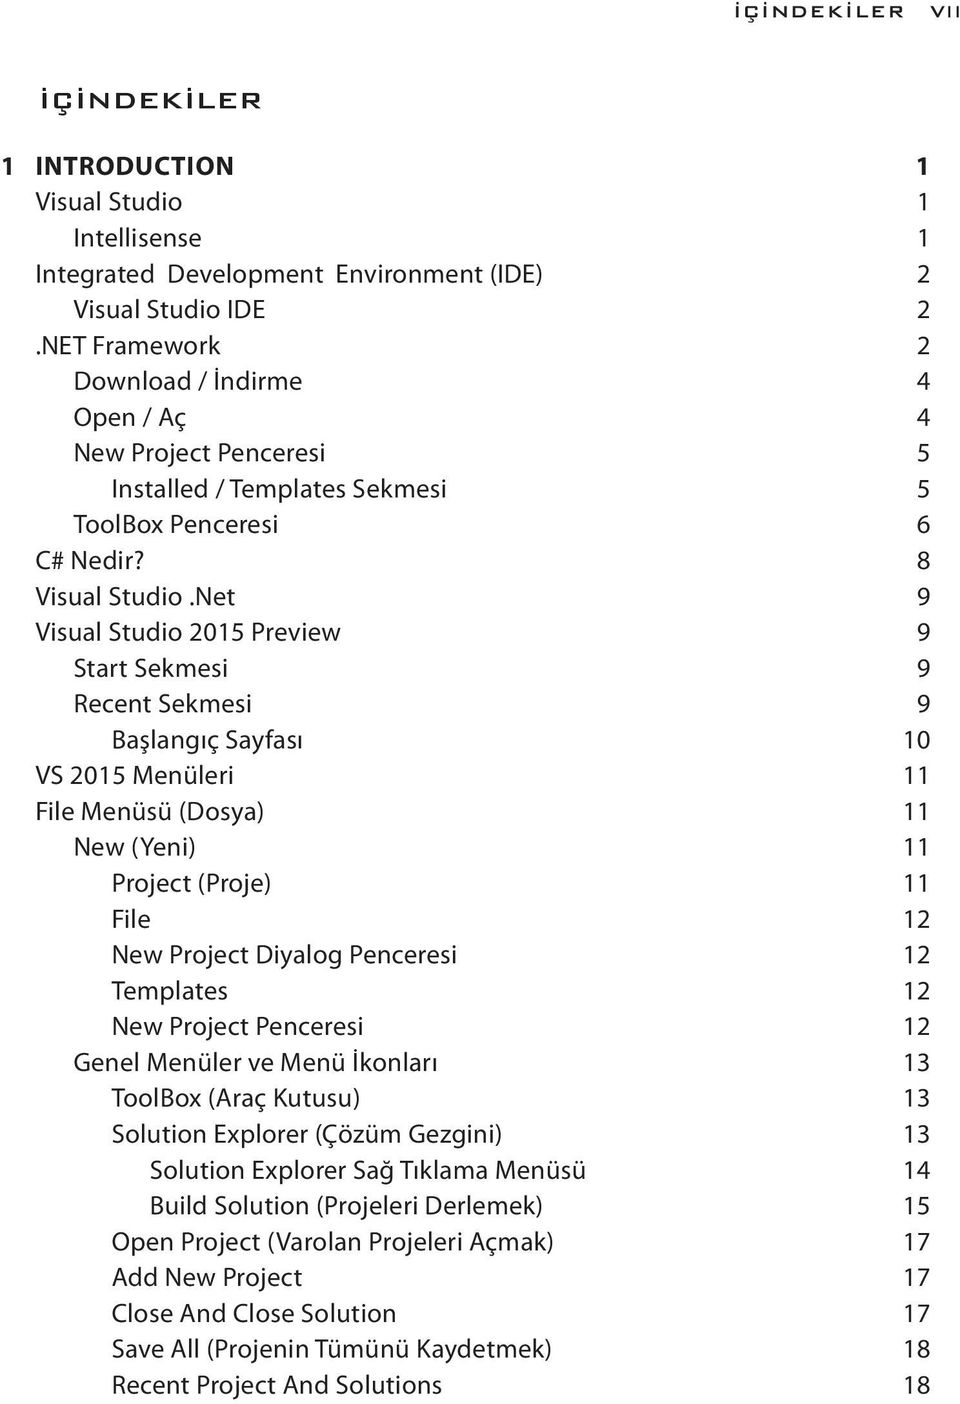 Net 9 Visual Studio 2015 Preview 9 Start Sekmesi 9 Recent Sekmesi 9 Başlangıç Sayfası 10 VS 2015 Menüleri 11 File Menüsü (Dosya) 11 New (Yeni) 11 Project (Proje) 11 File 12 New Project Diyalog